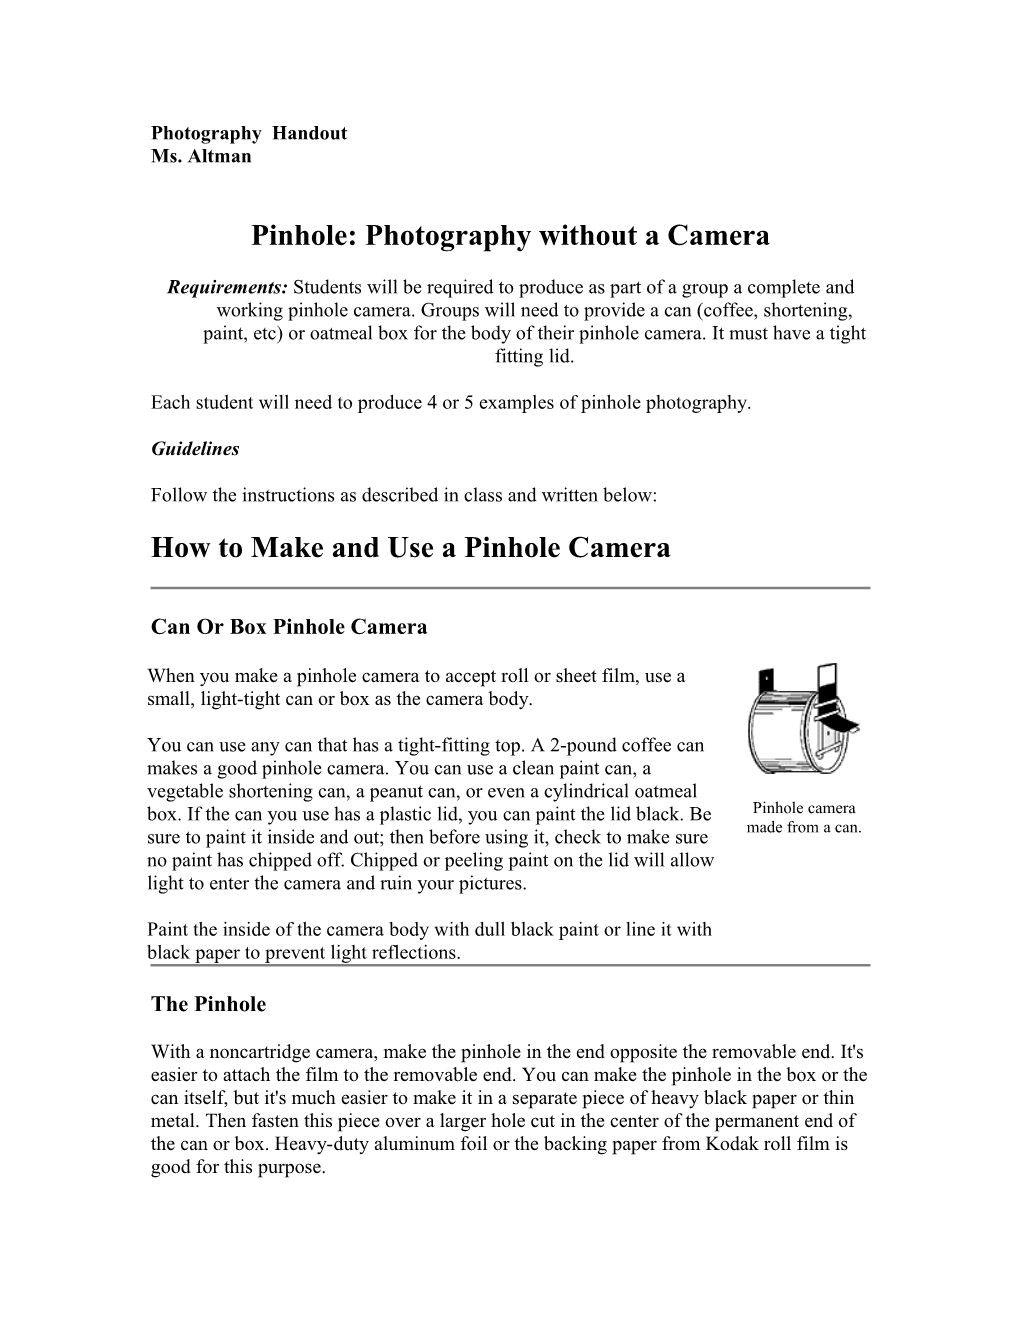 Pinhole:Photography Without a Camera